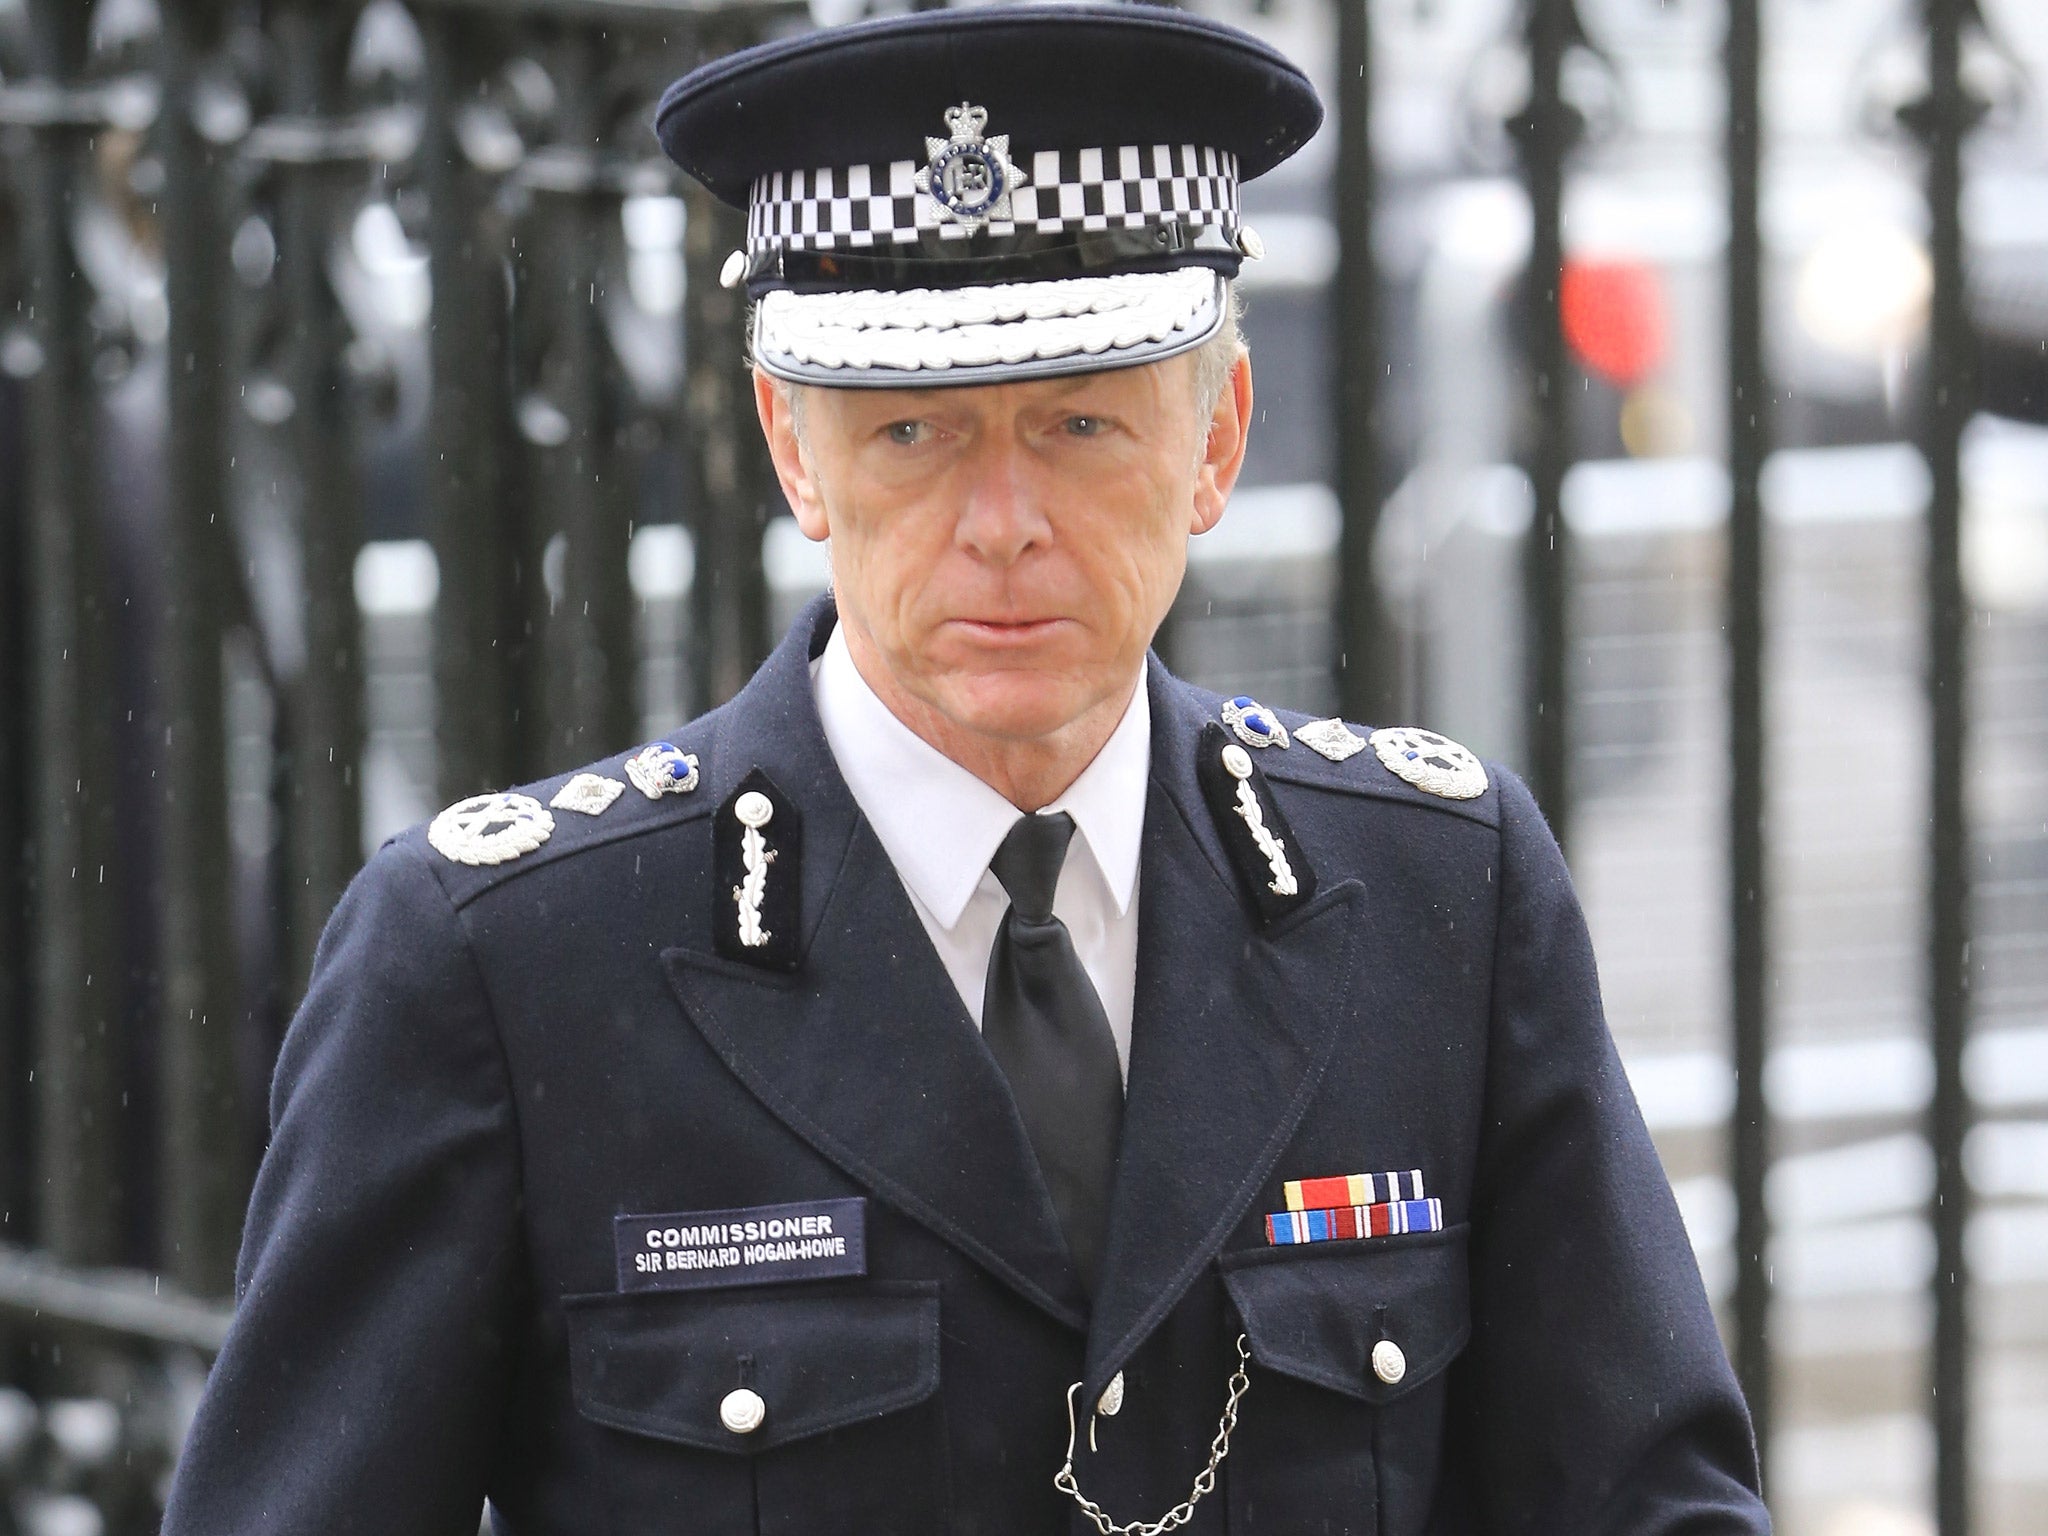 Sir Bernard Hogan-Howe is Britain’s most senior police officer